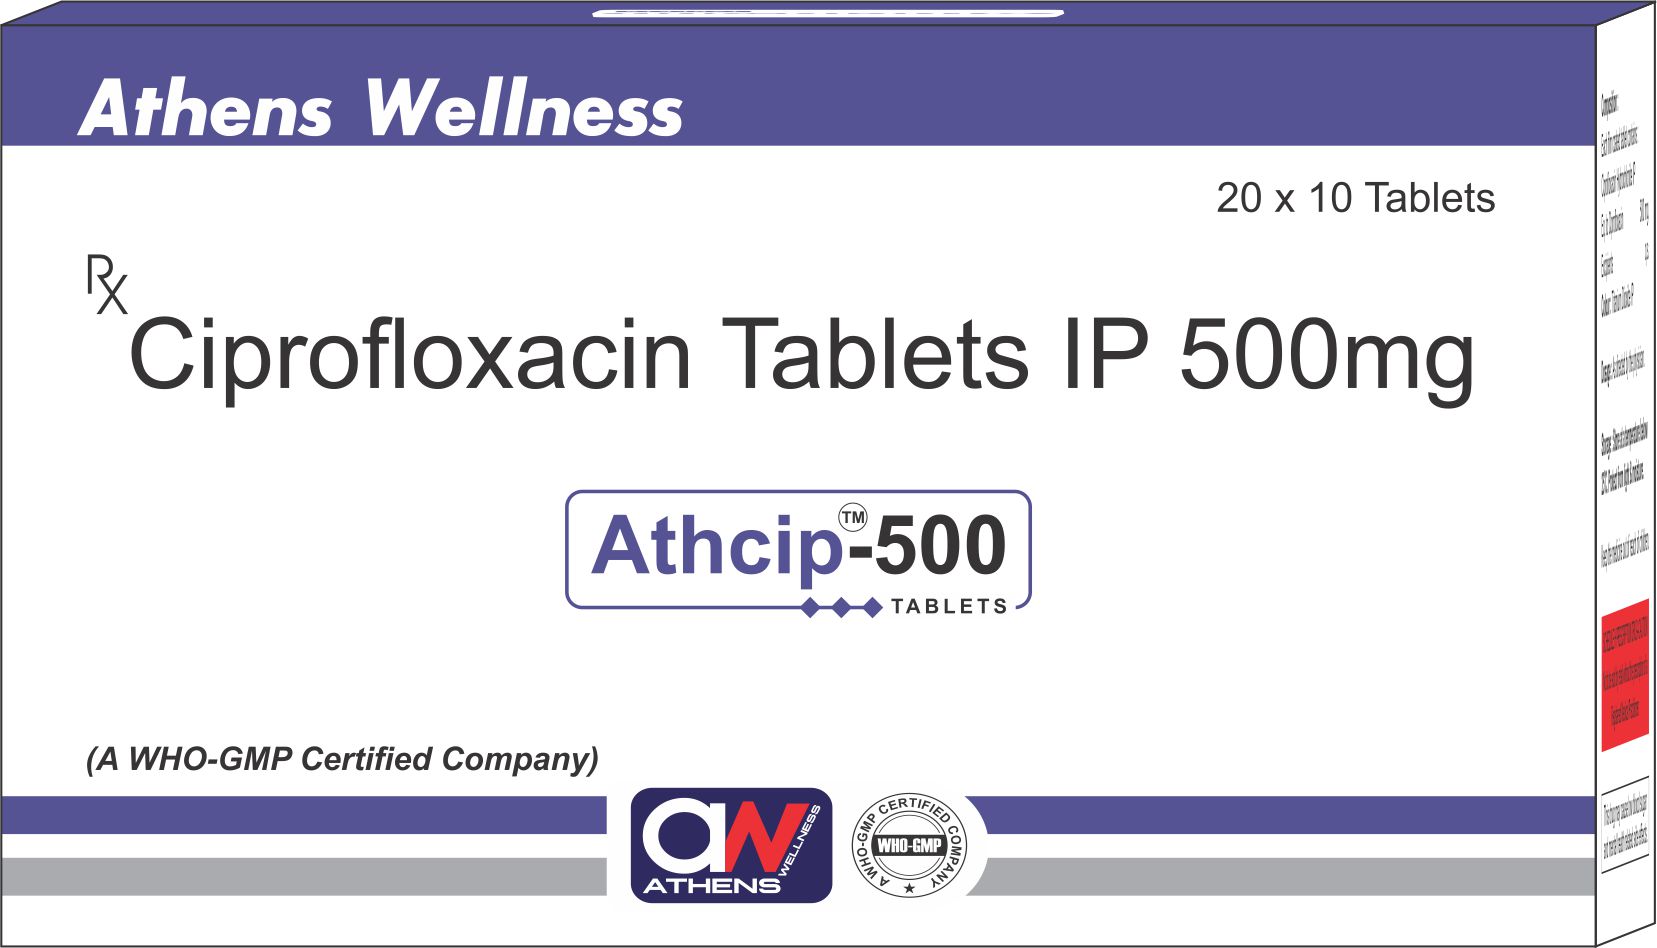 ATHCIP - 500 TABLETS